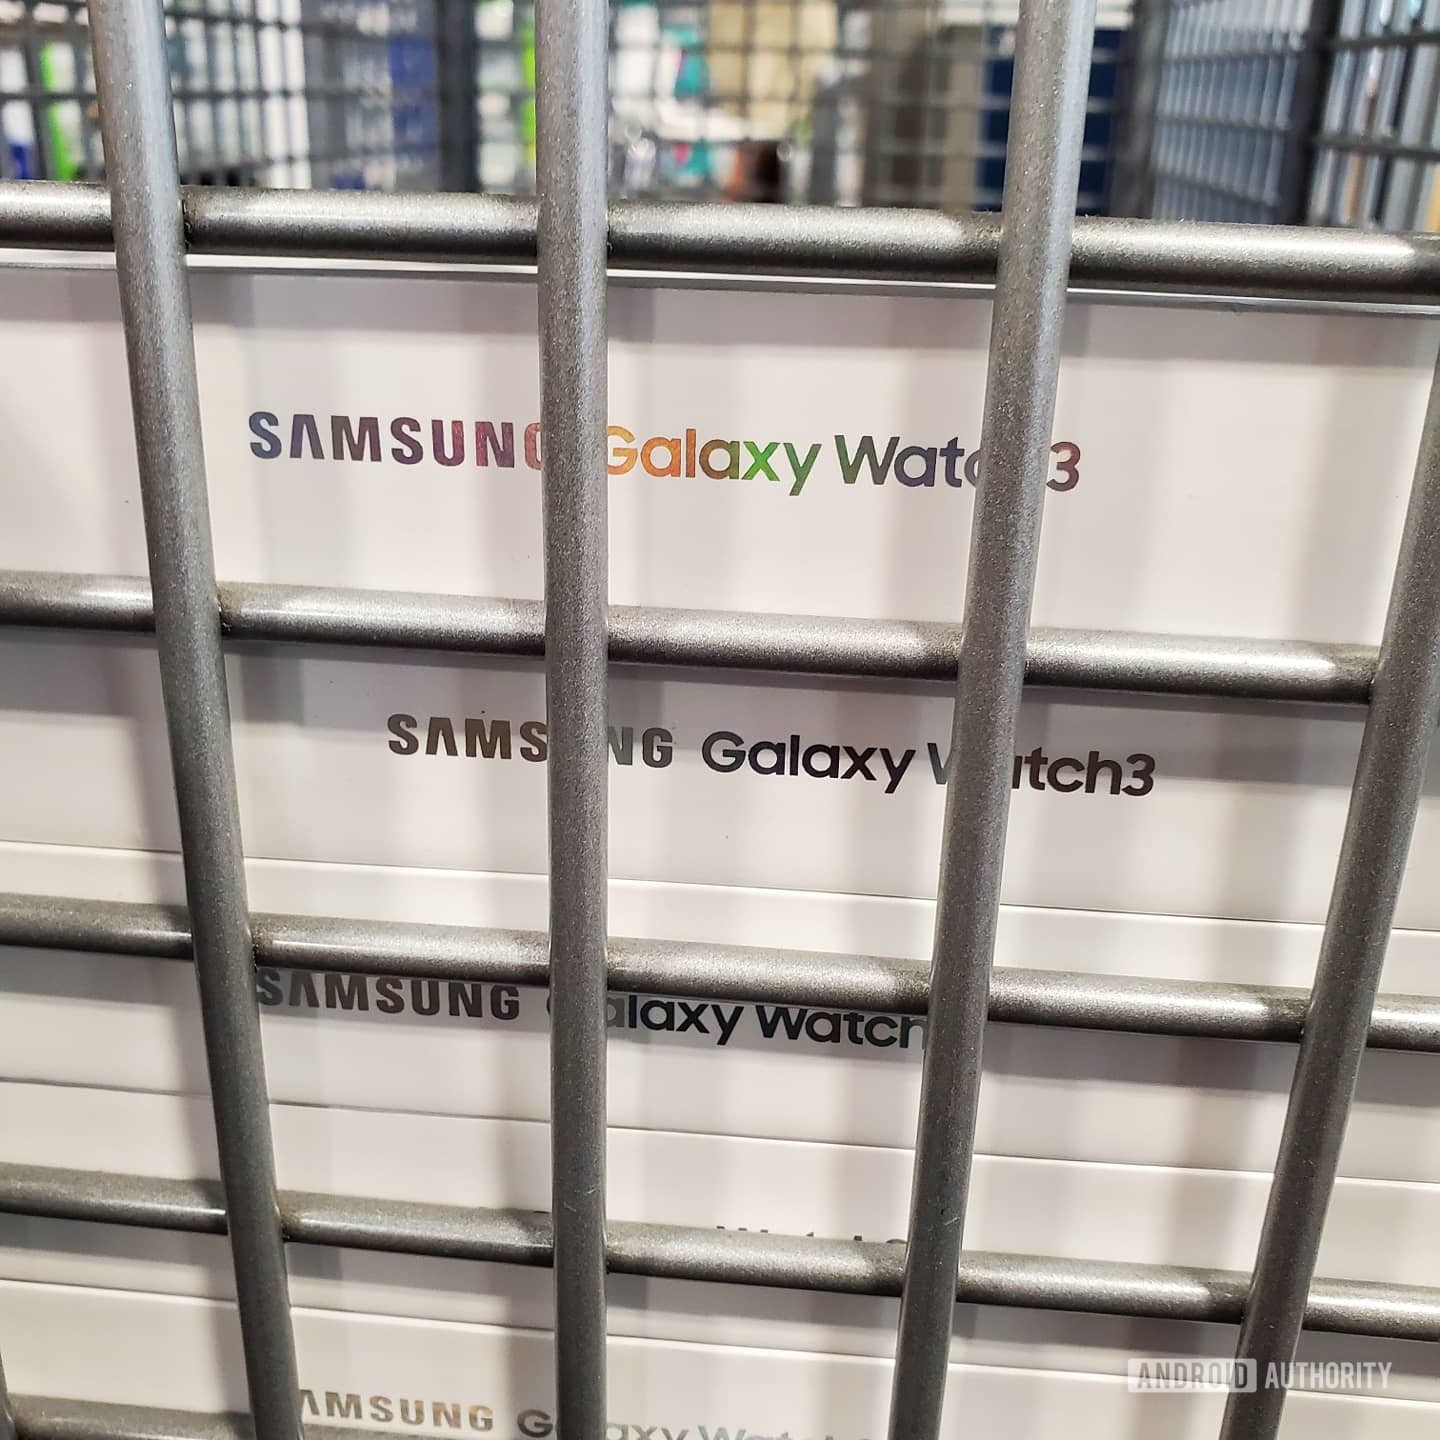 Samsung Gaalxy Watch 3 at Best Buy Pre Release 2